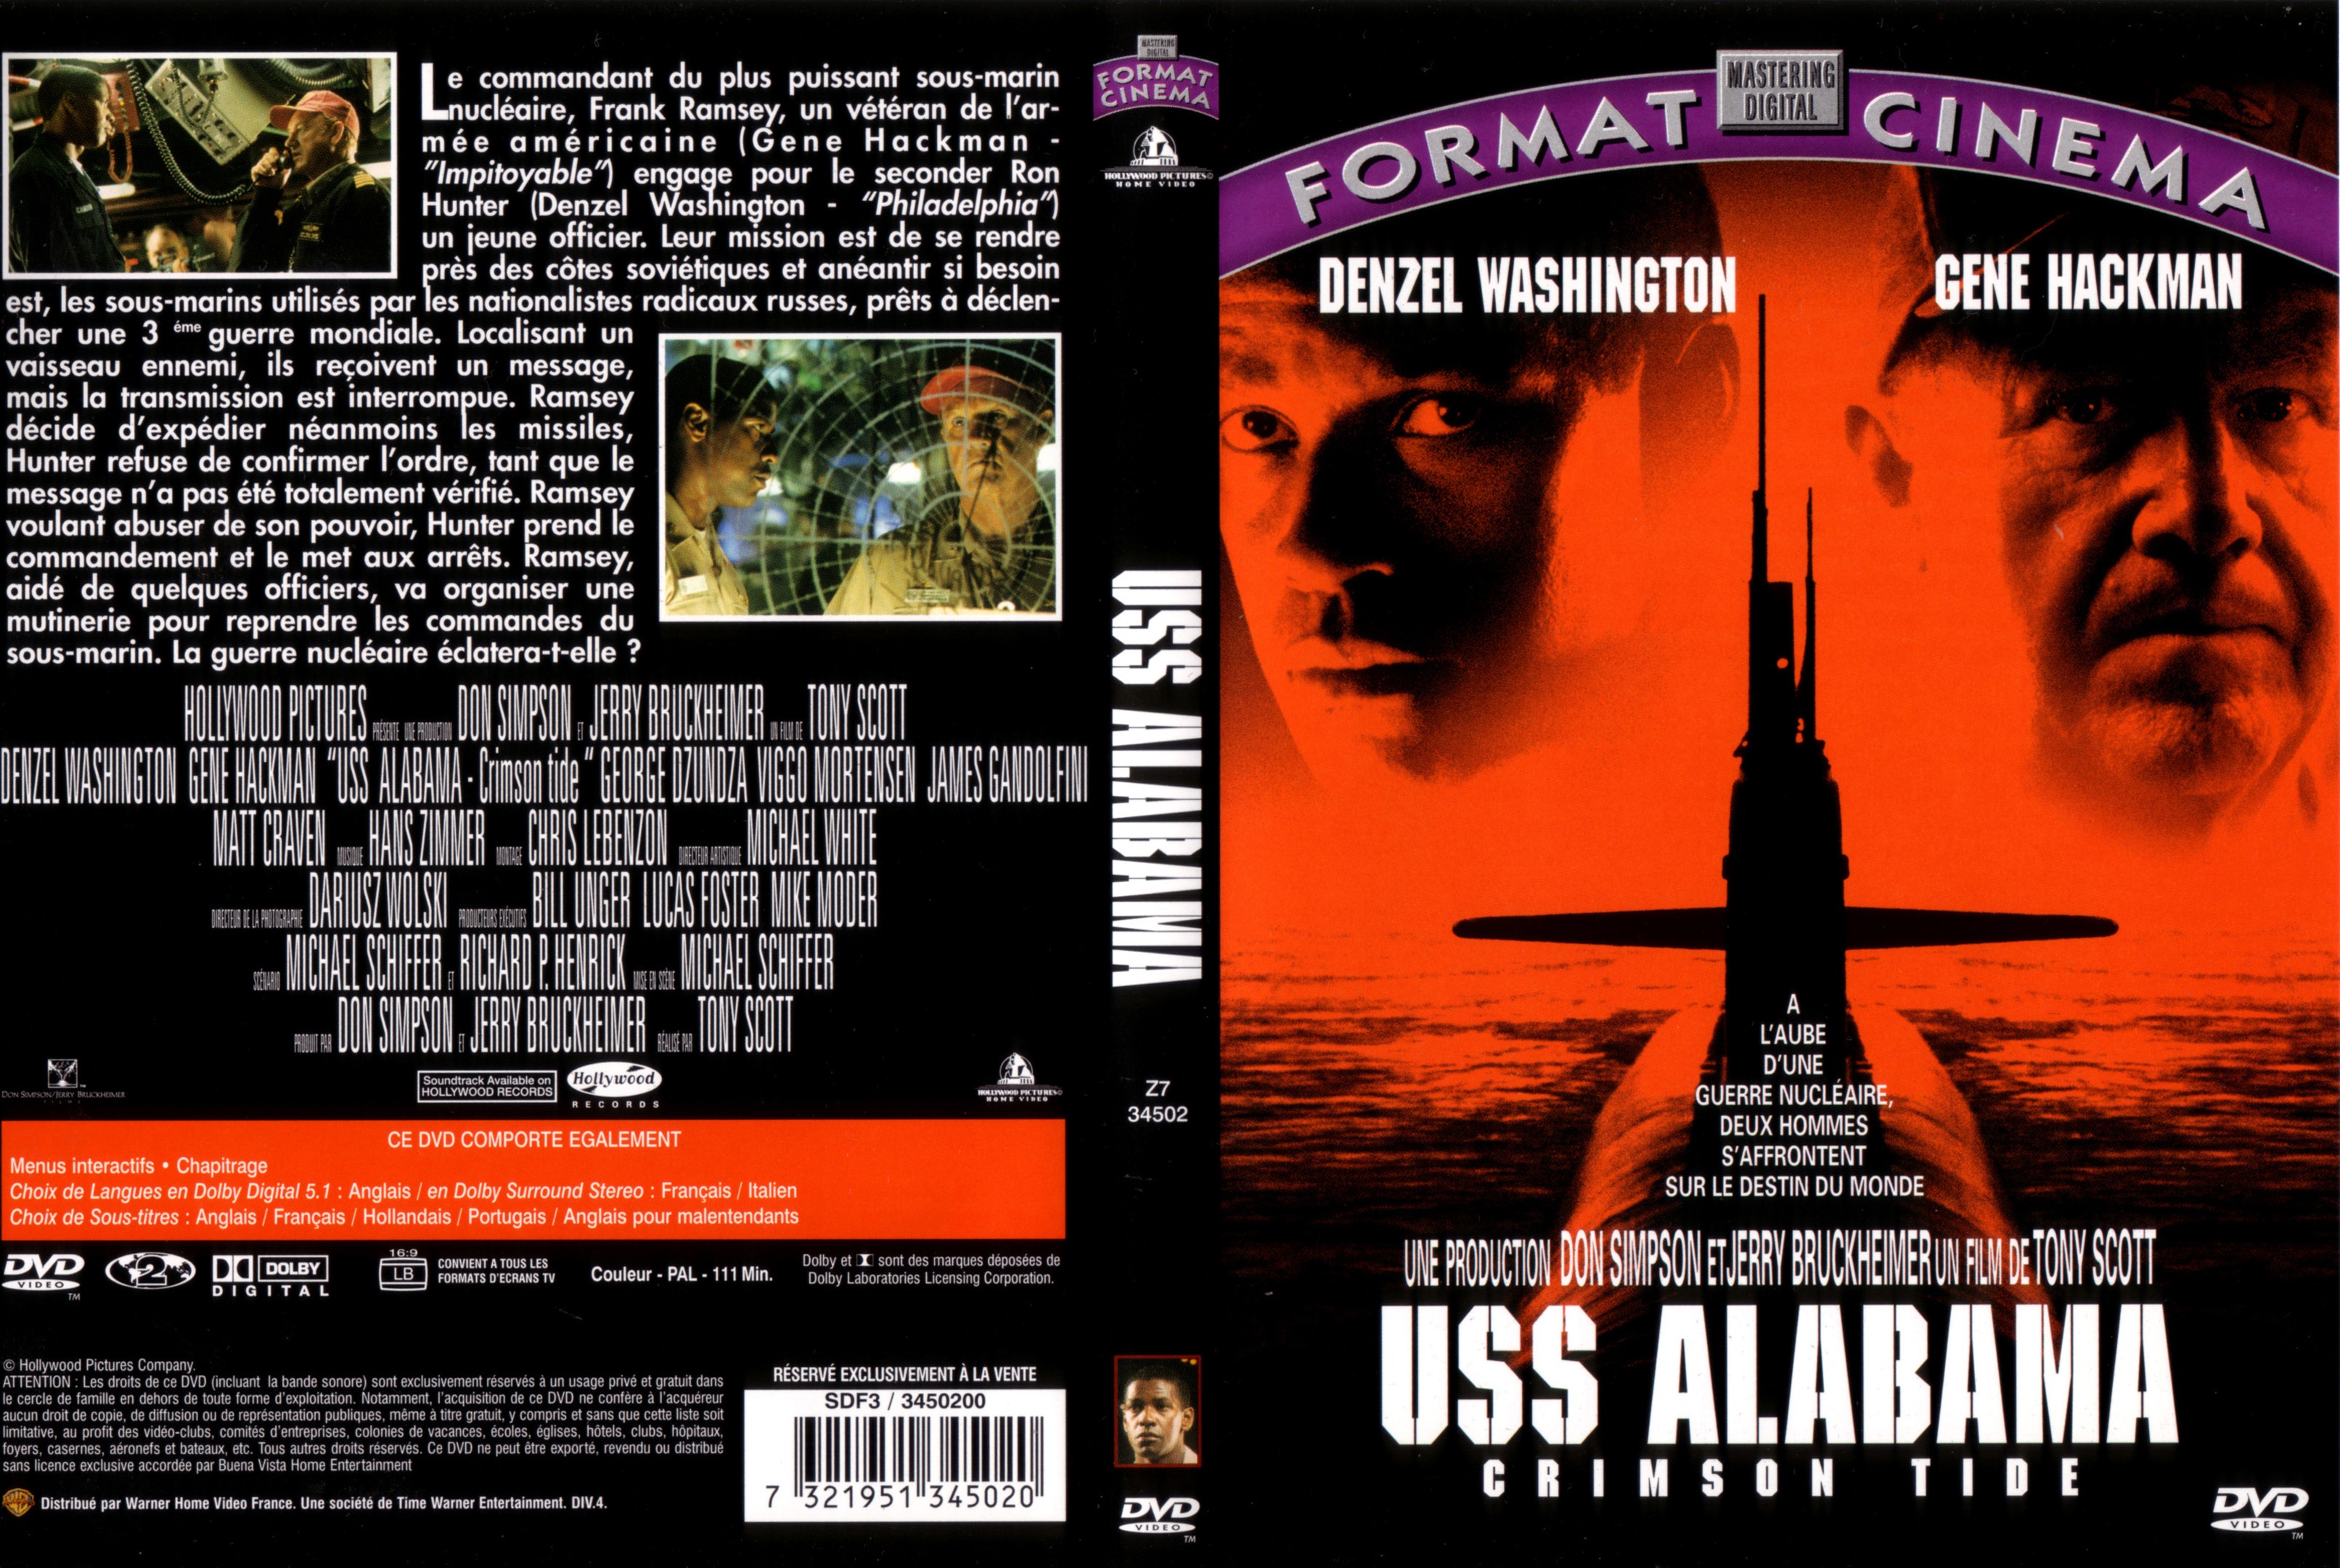 Jaquette DVD USS Alabama v2